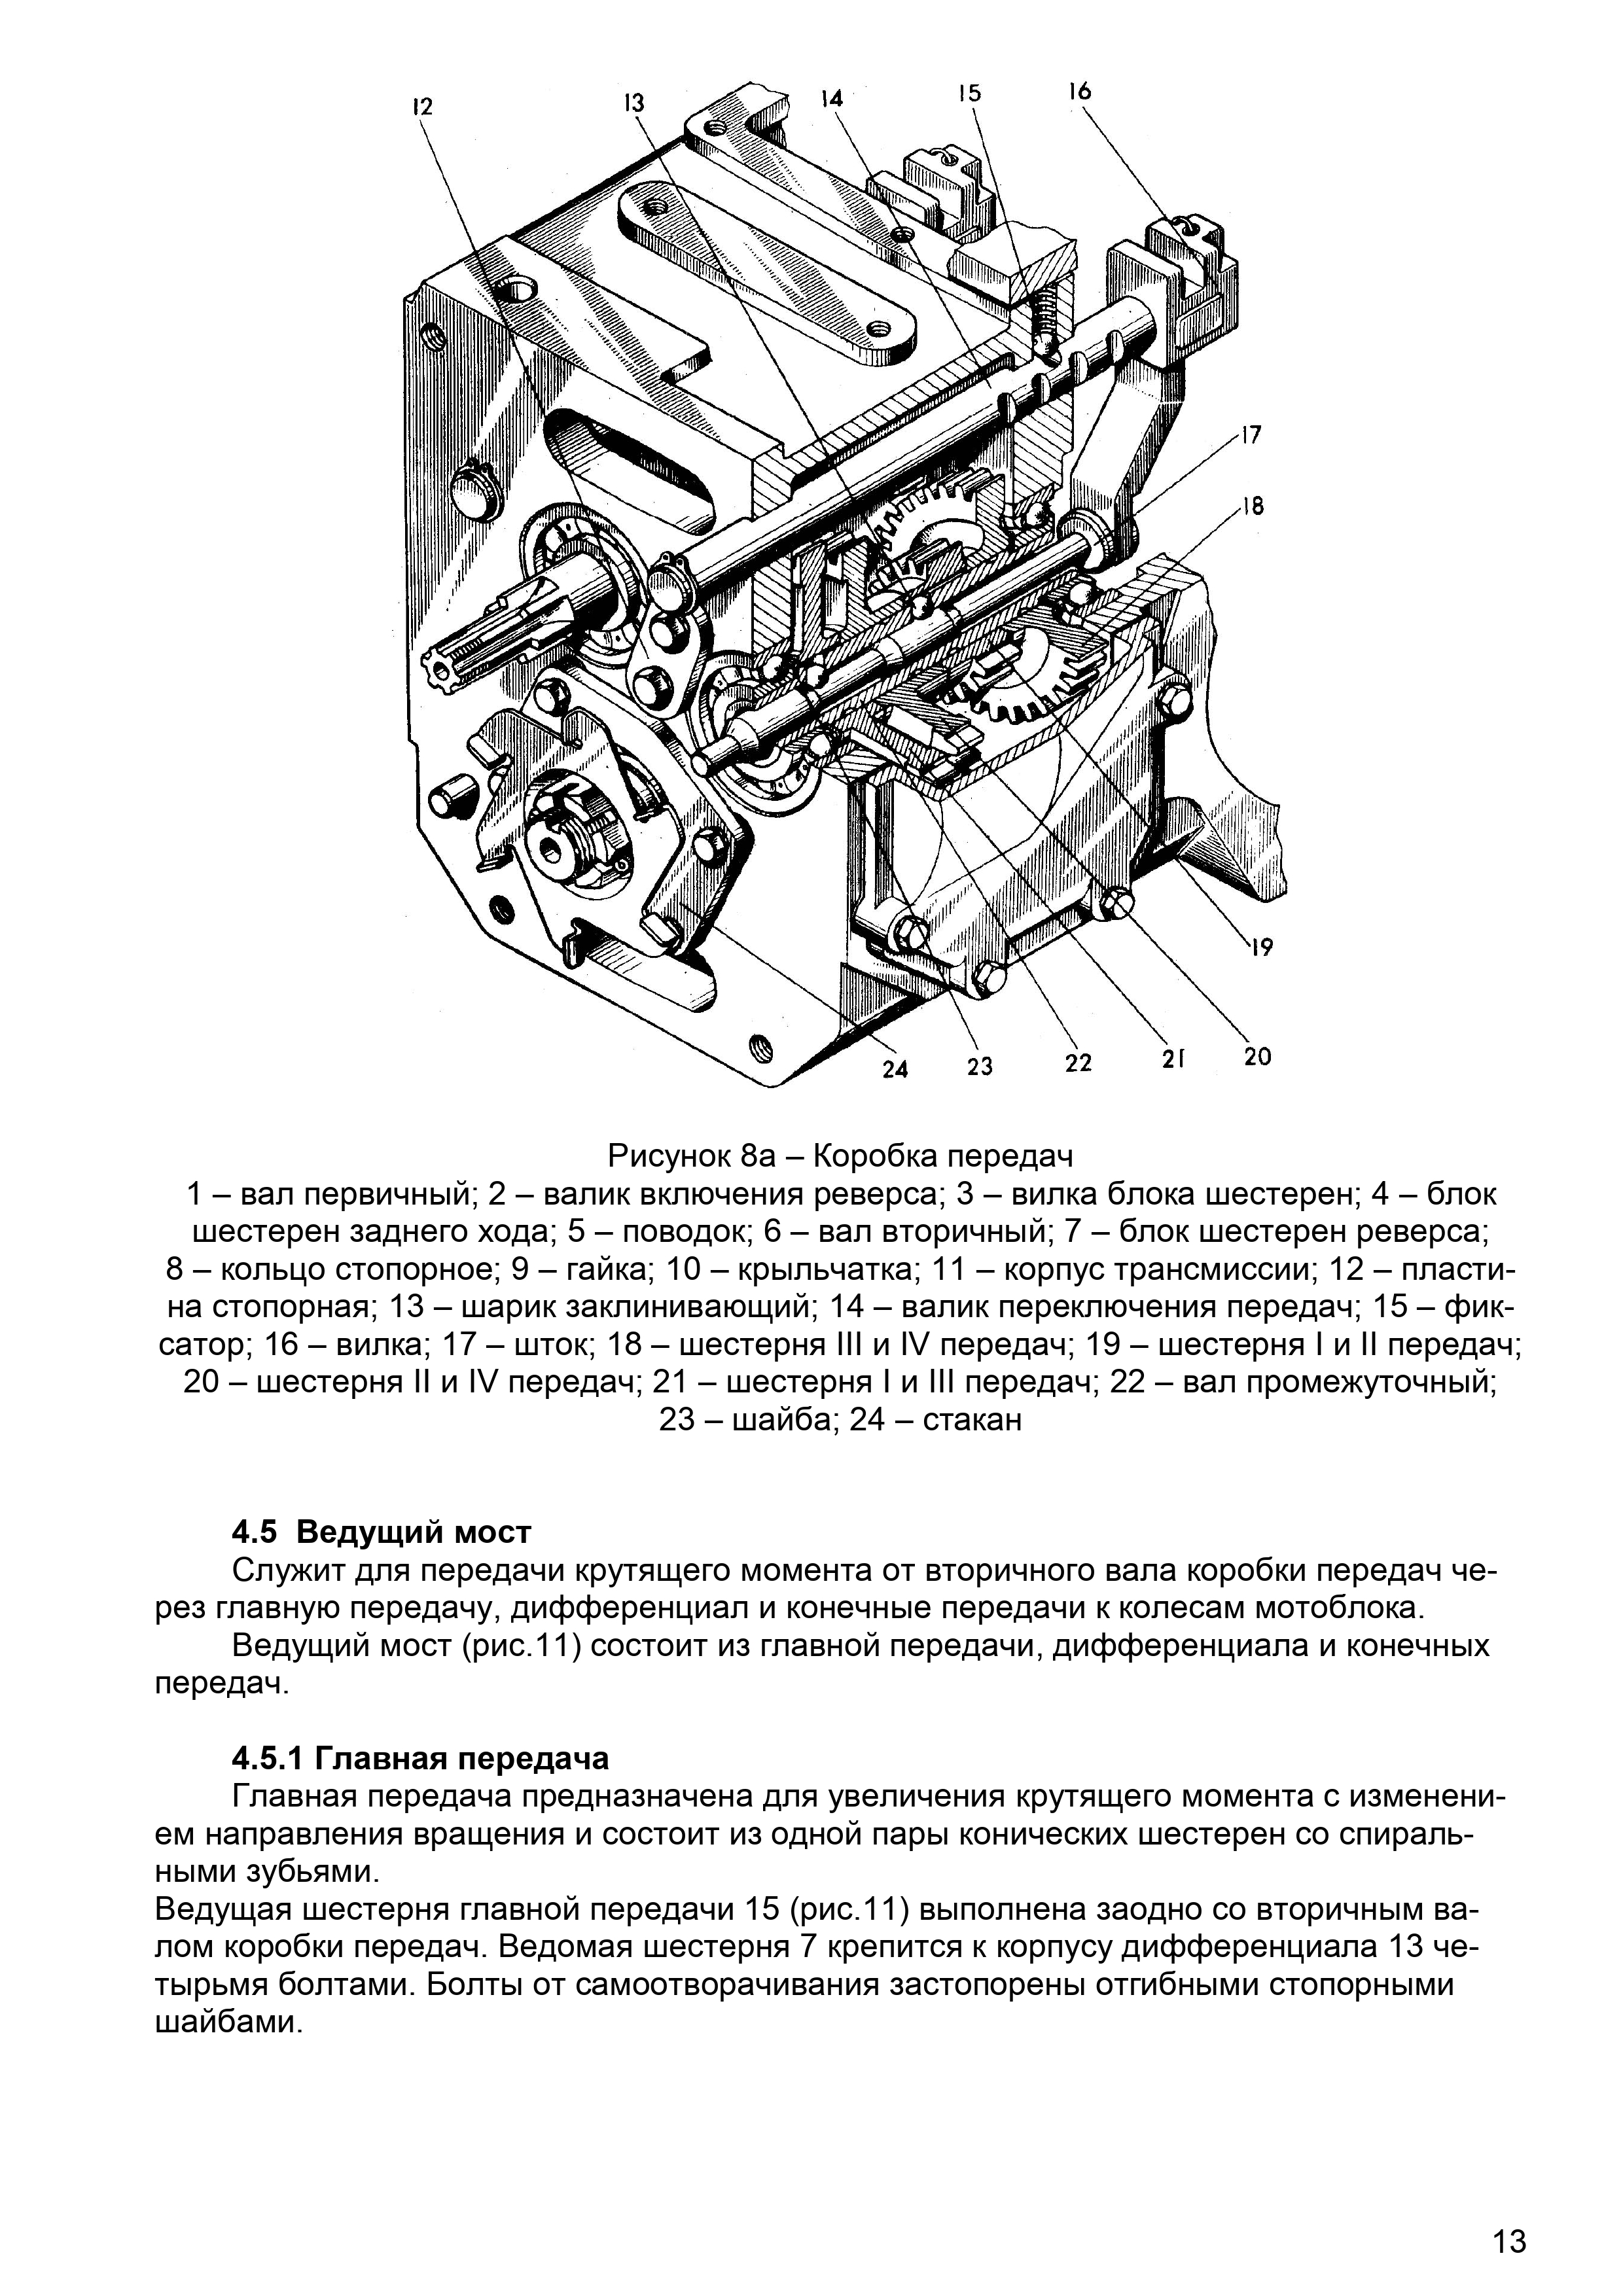 belarus_09h_manual i catalog (1)_page-0013